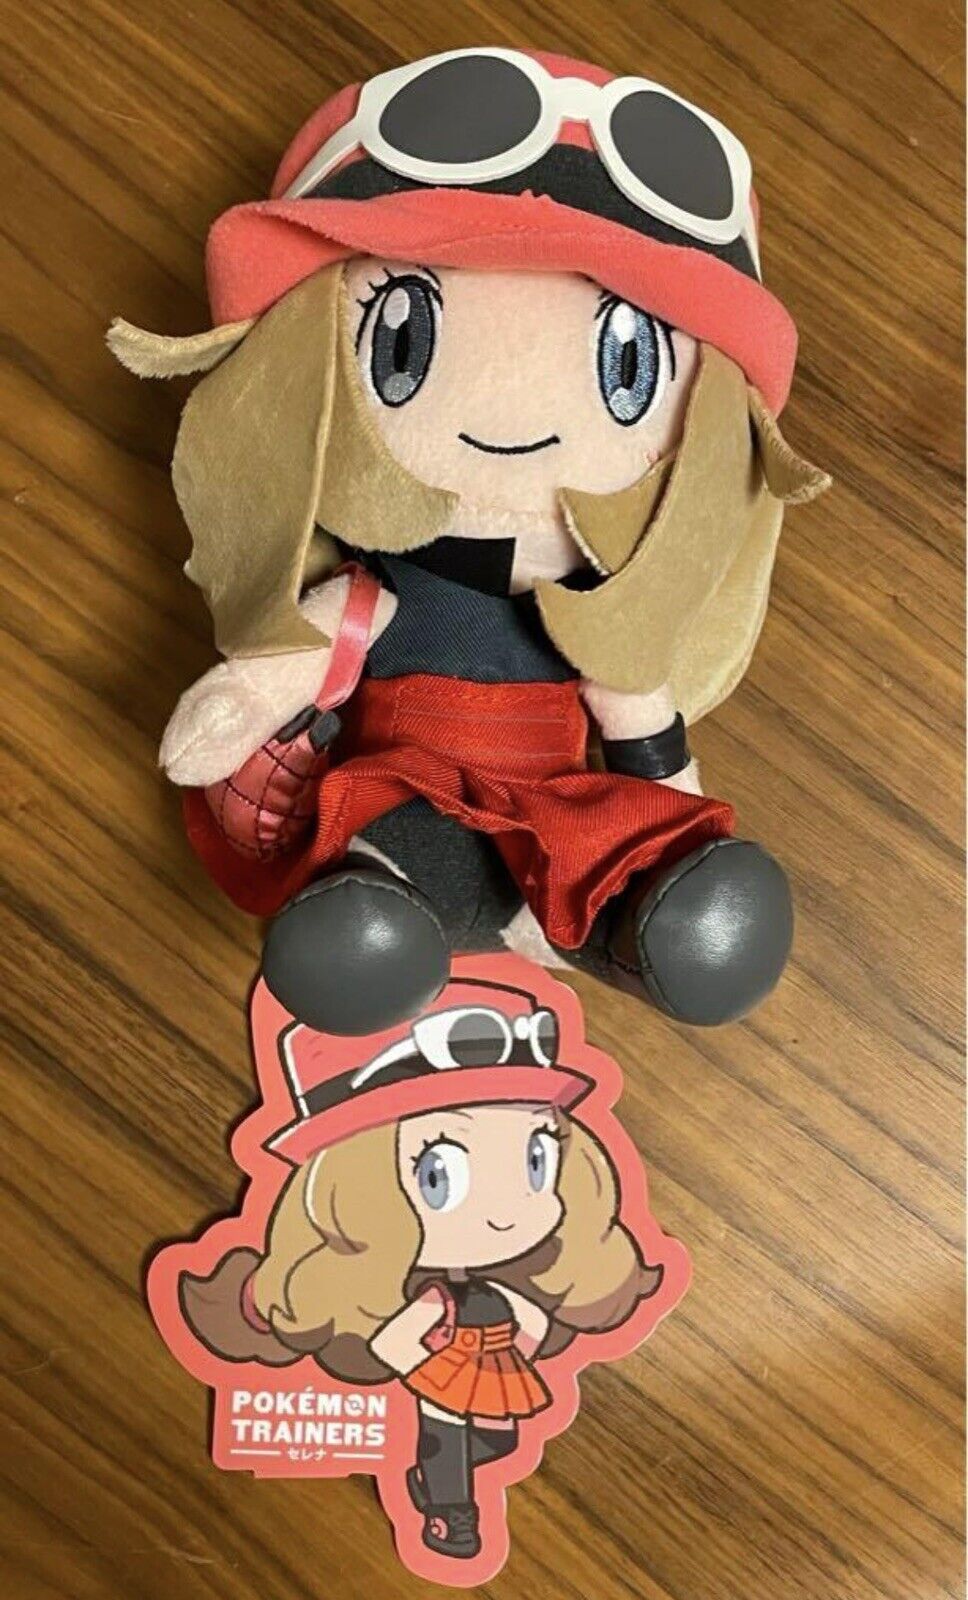 Pokemon Center Serena Plush Toy Mascot Pokemon Trainer Series Japan w/tag